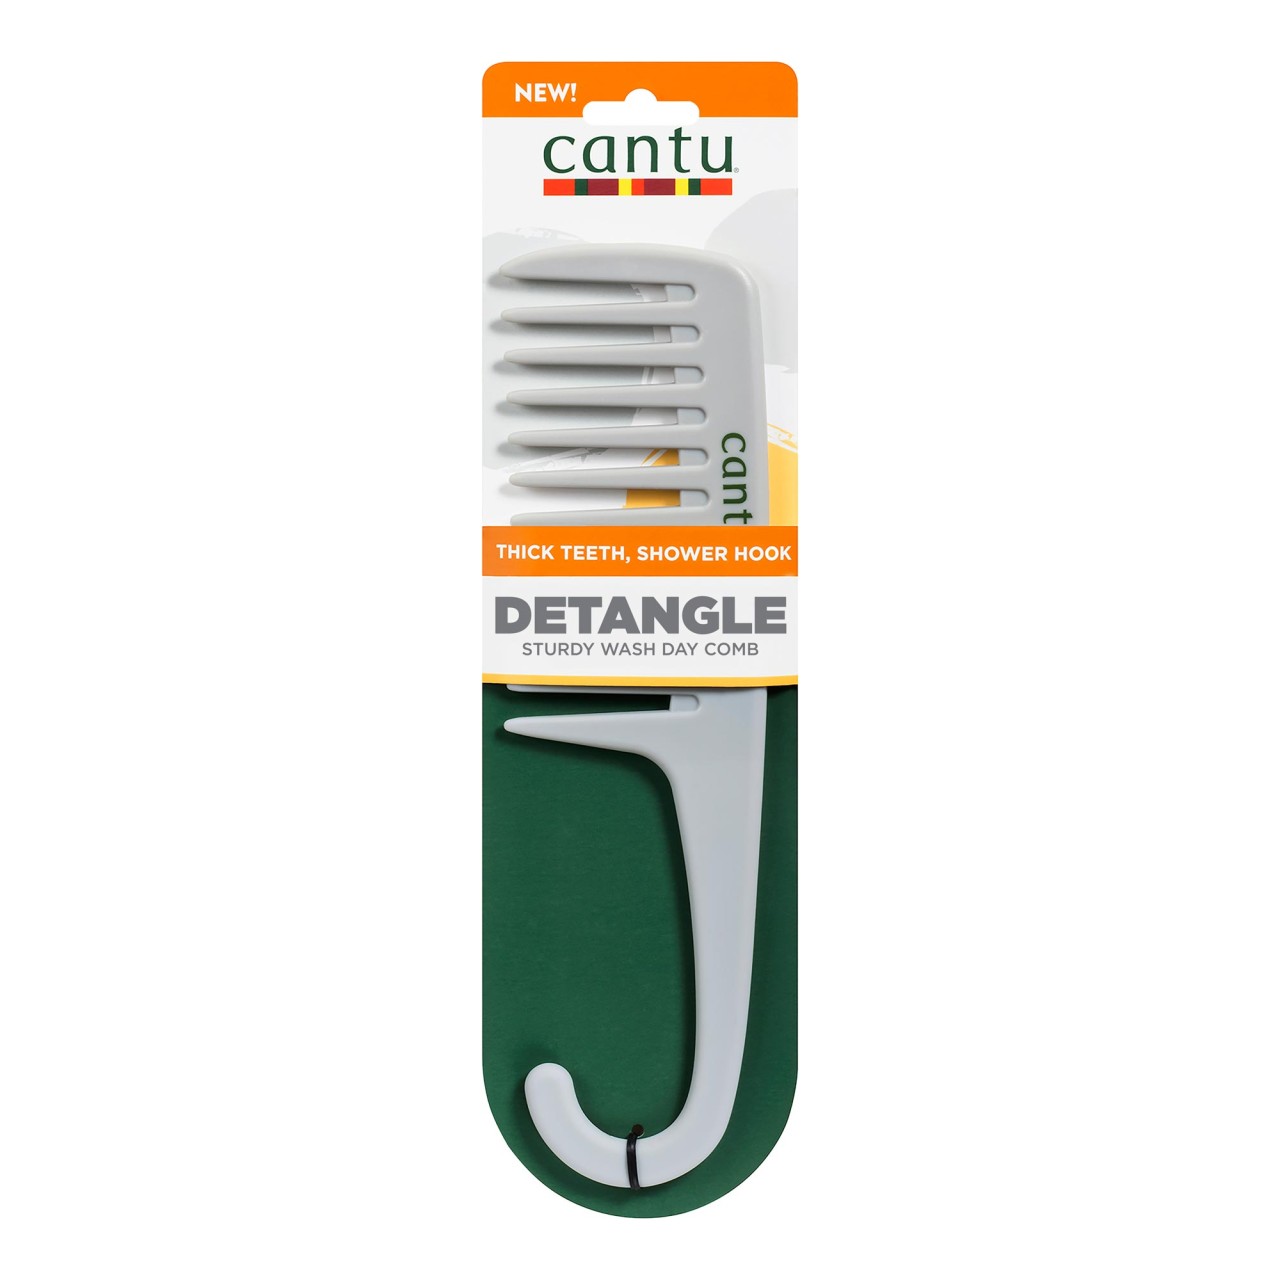 cantu - Detangle Sturdy Wash Day Comb - 